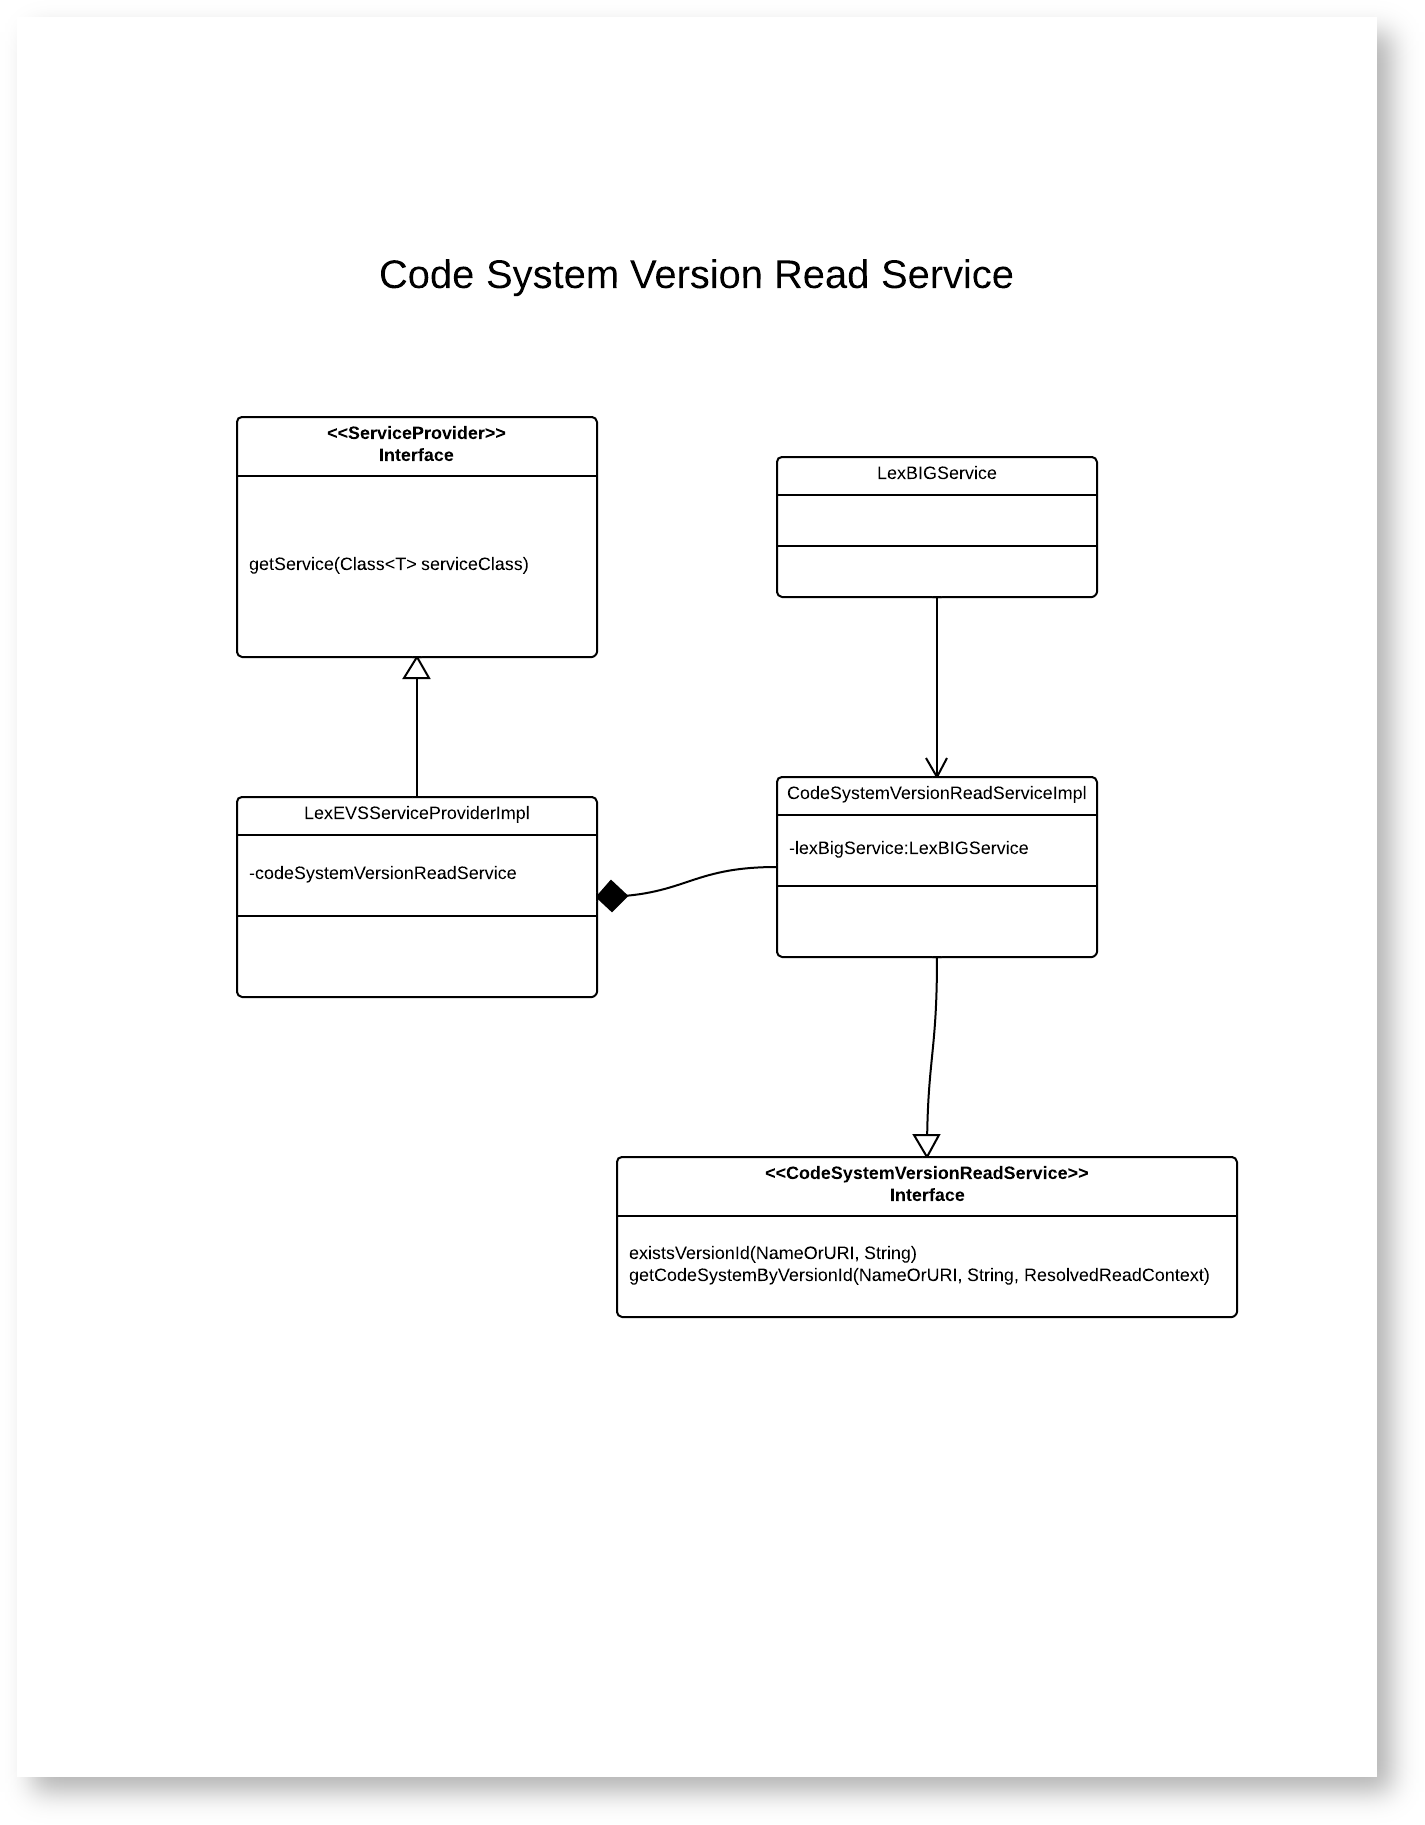 Code system version read service diagram